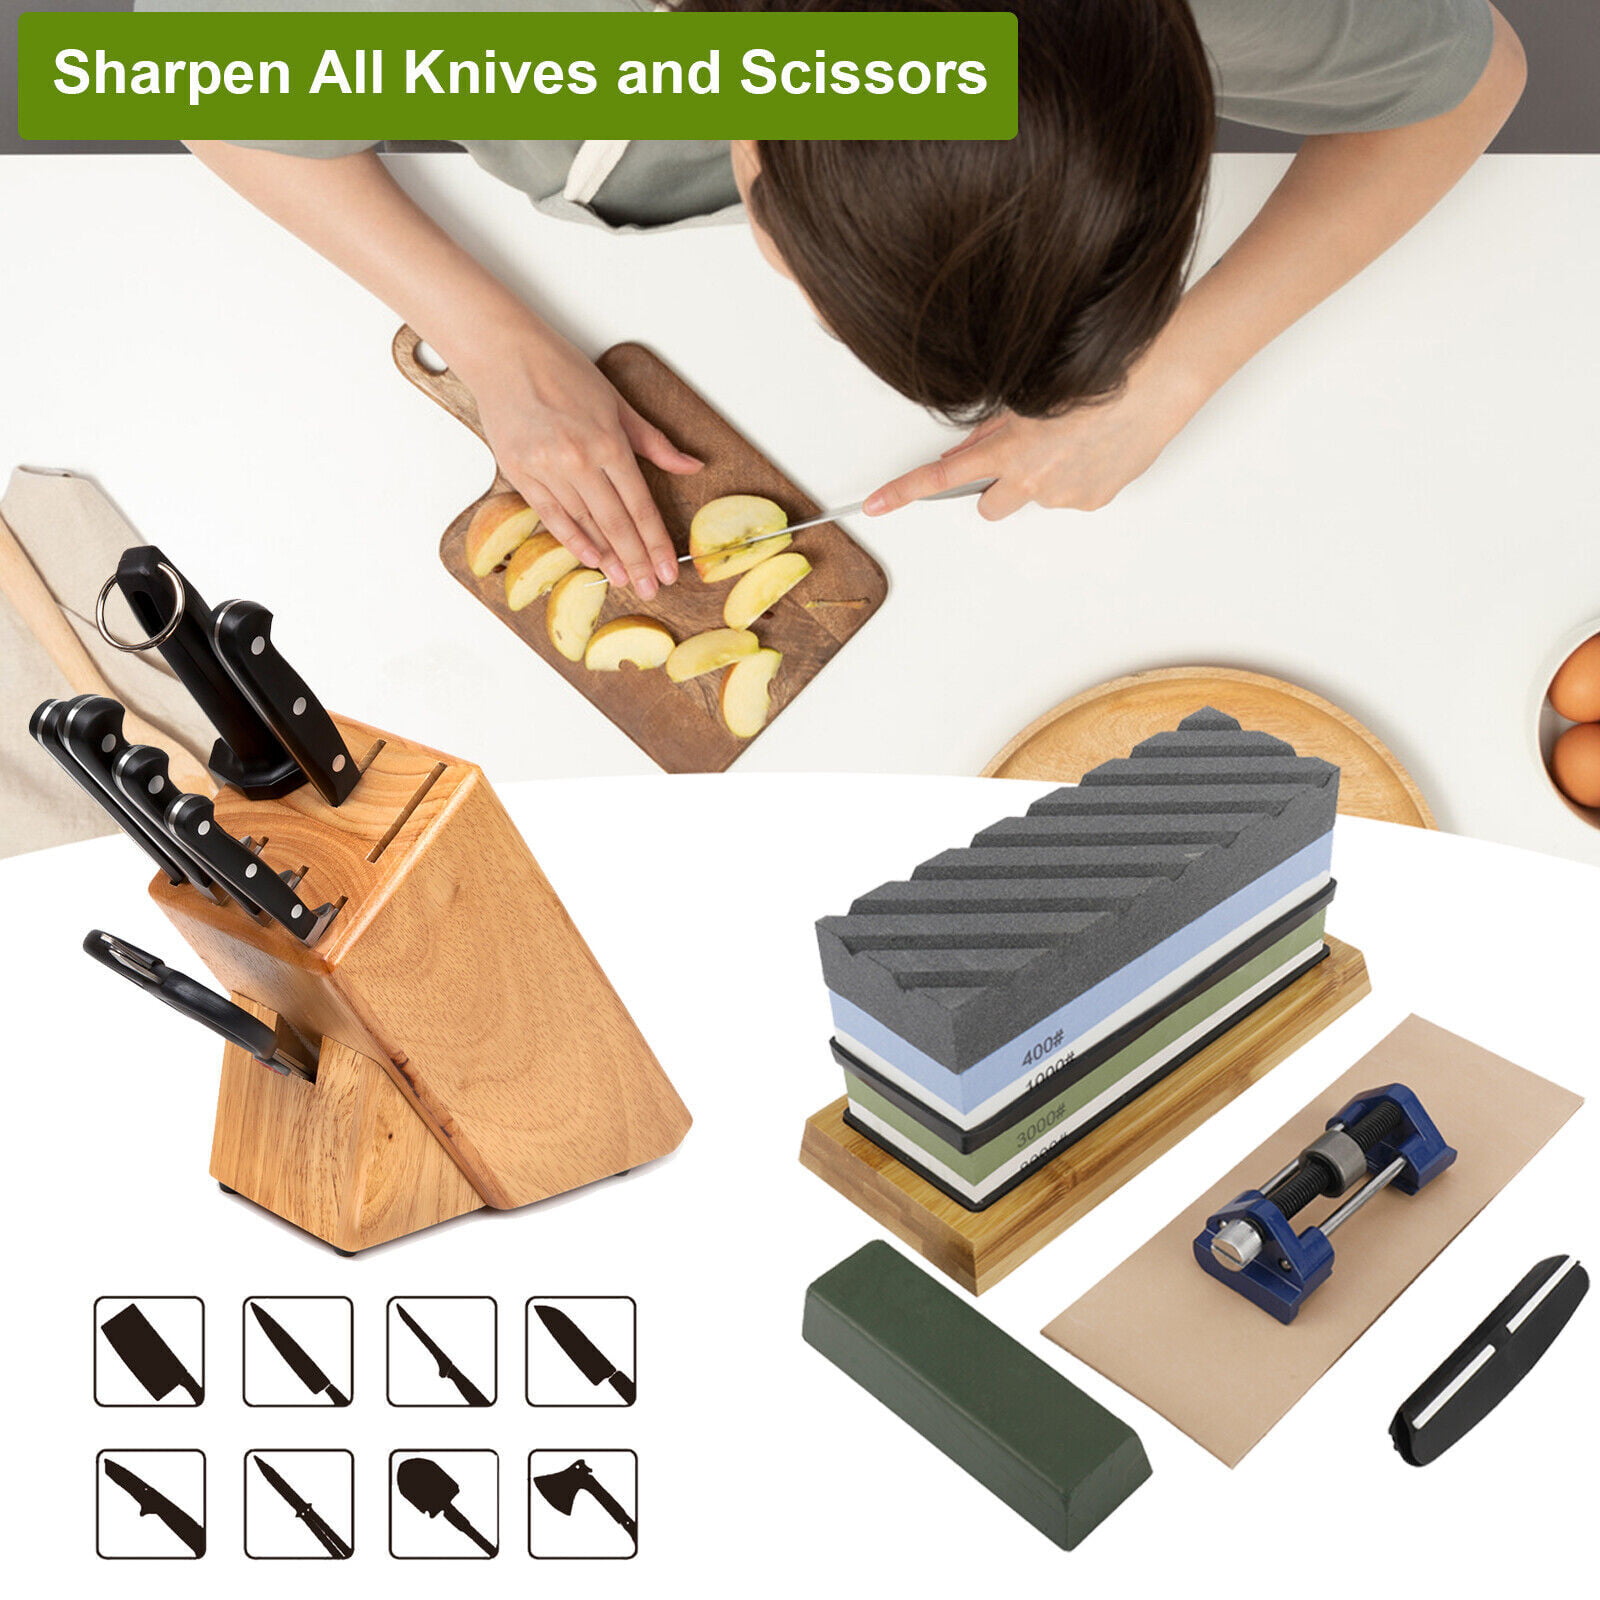 Simple knife sharpener for stones or sandpaper by rlasse